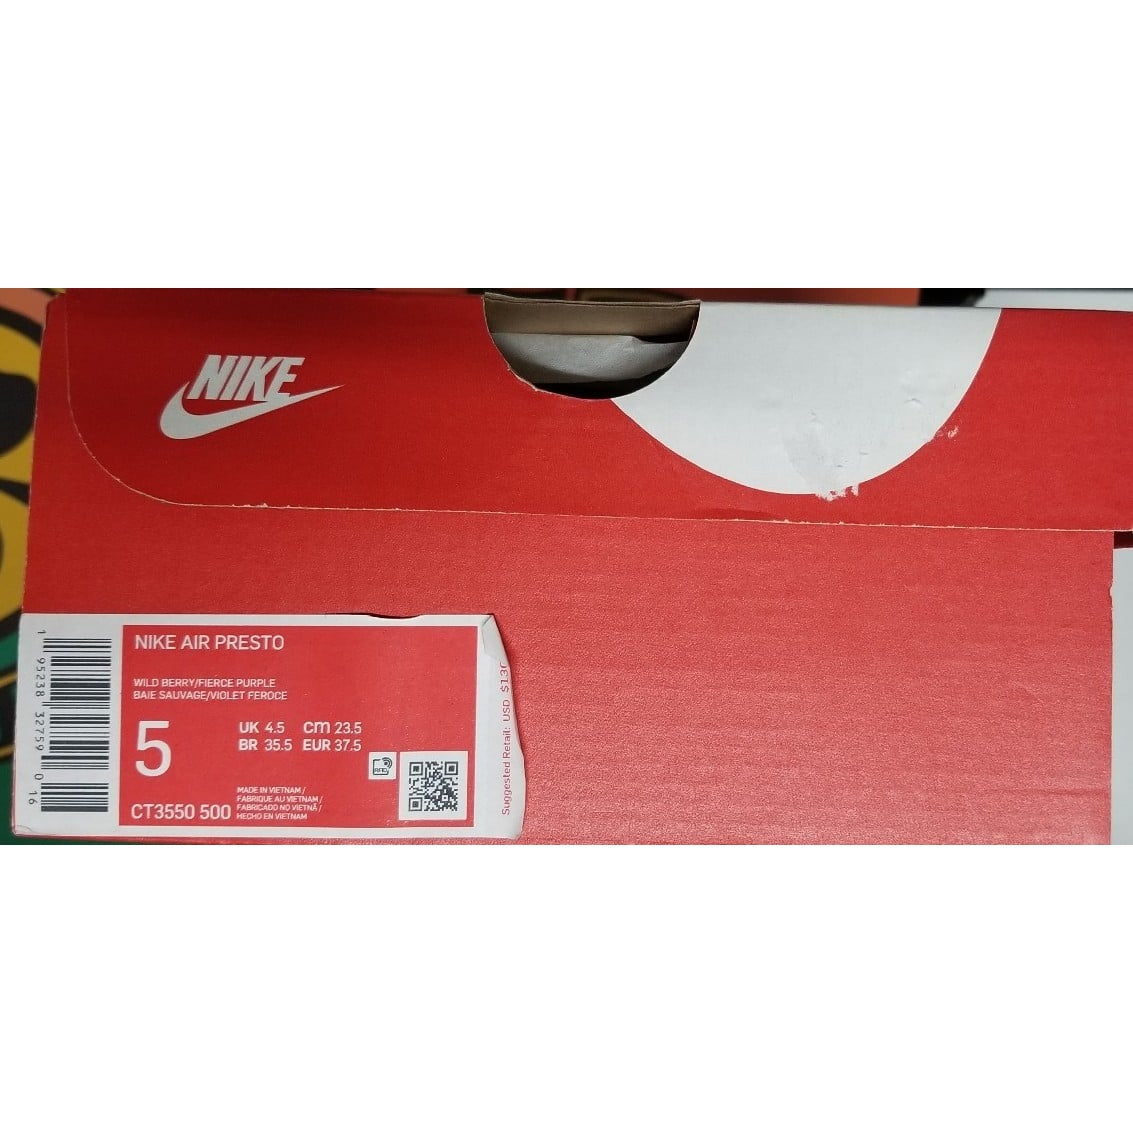 Nike Air Presto size